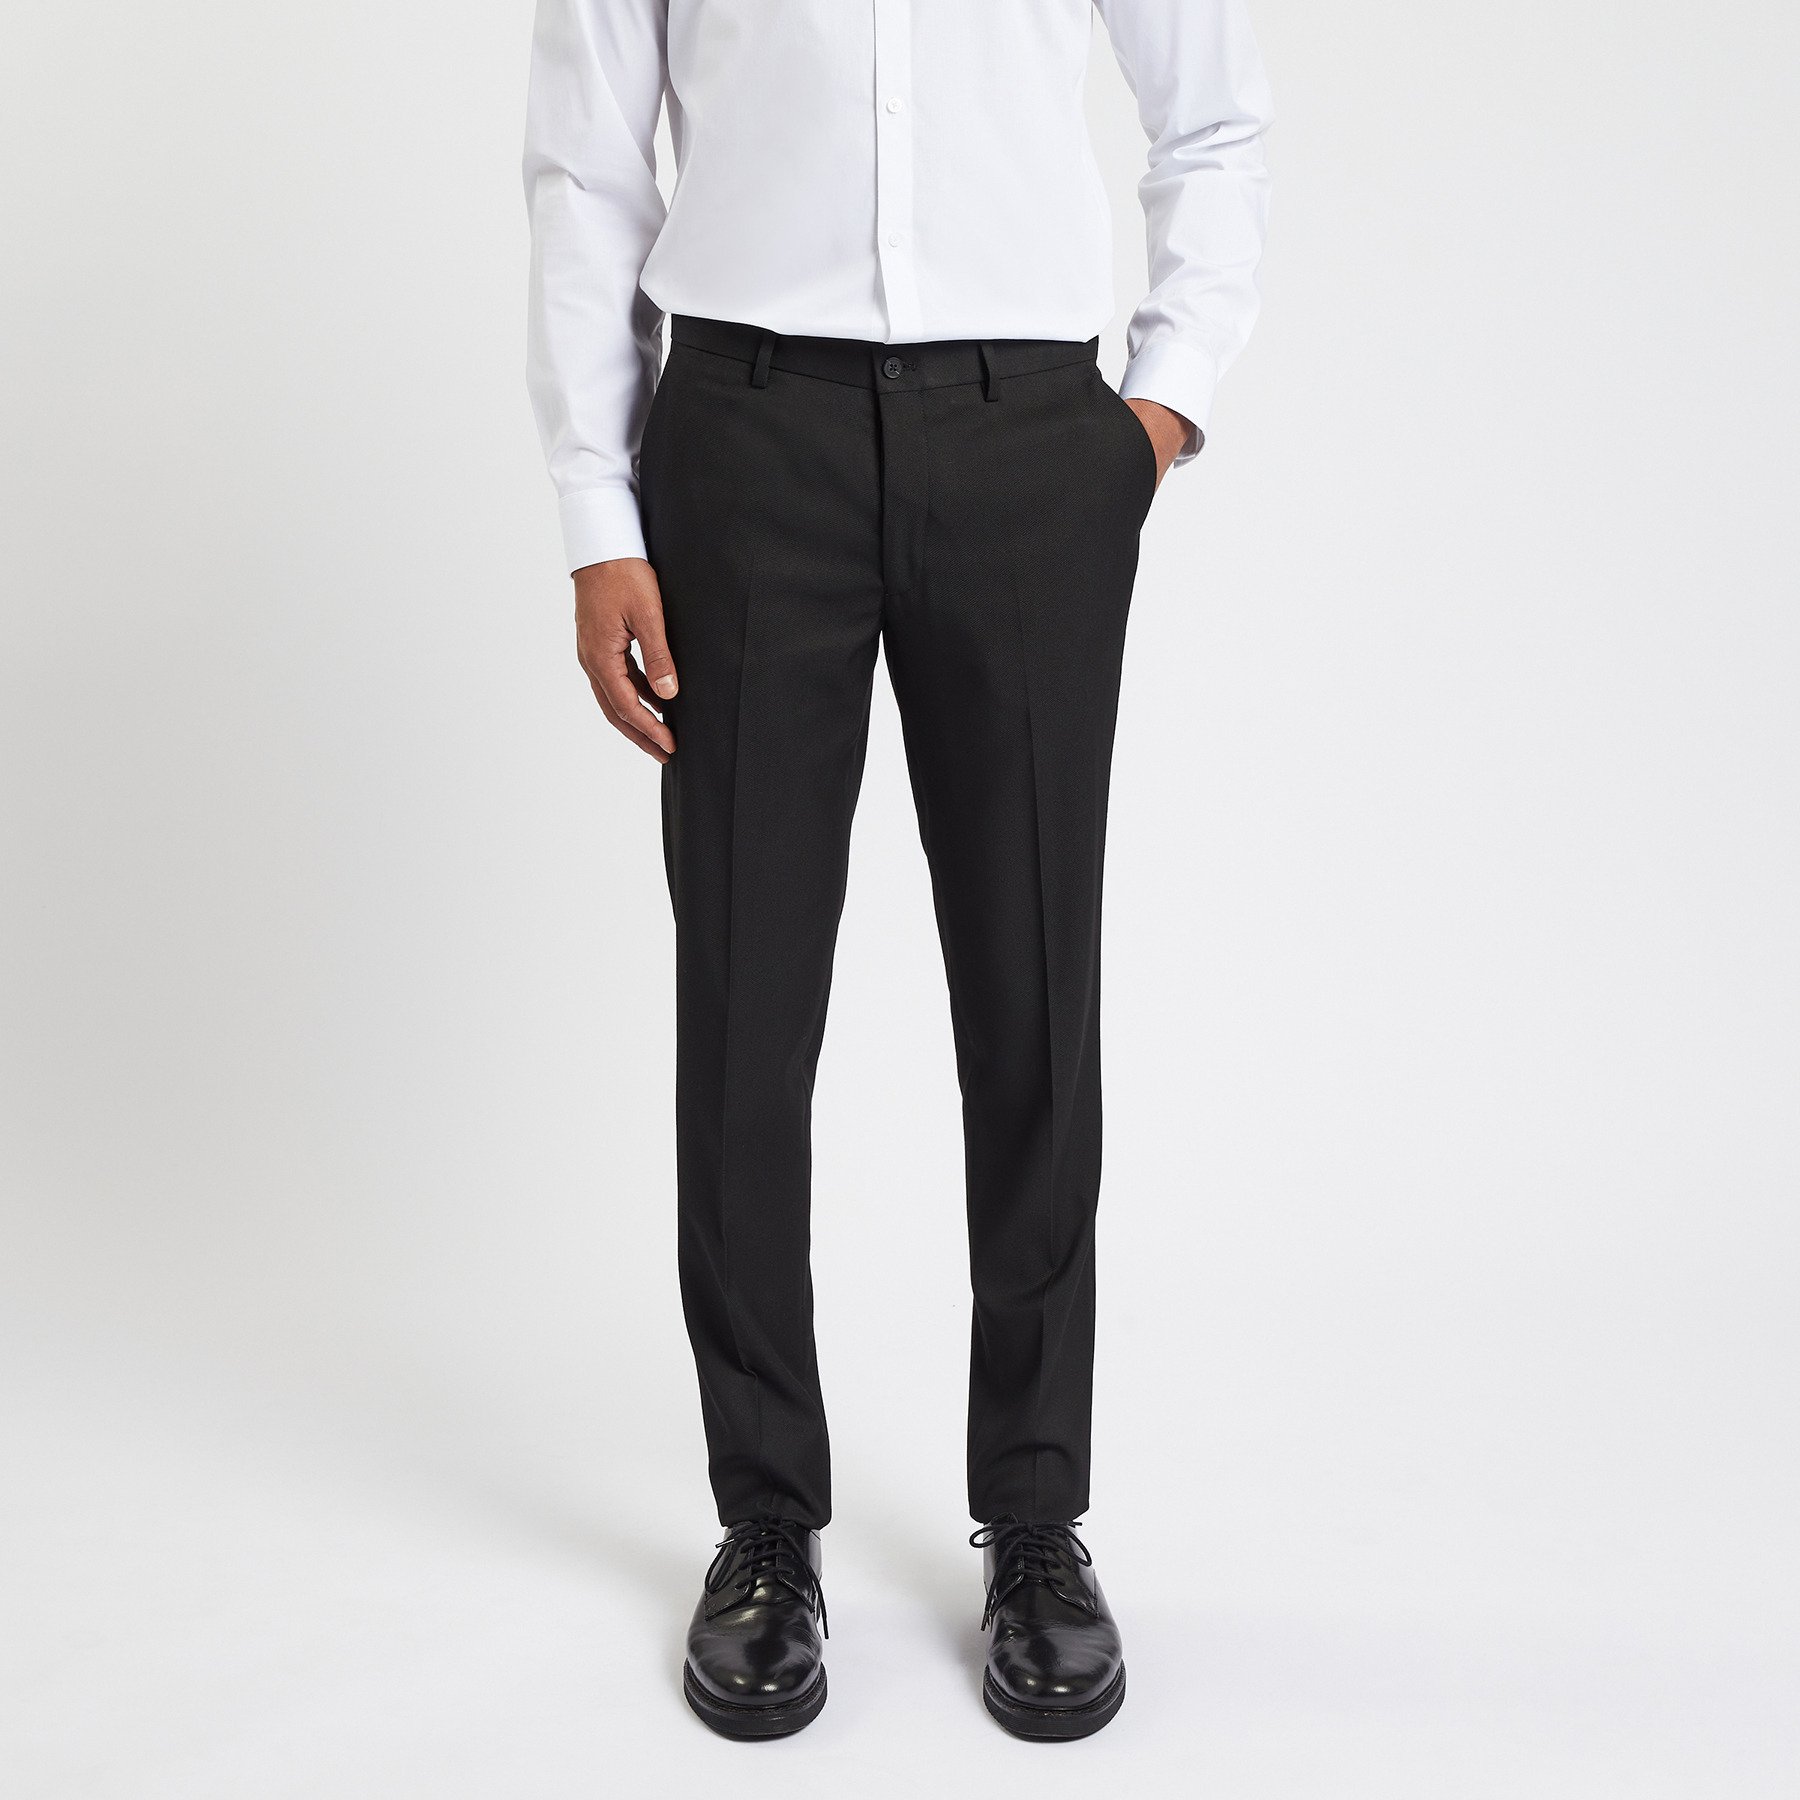 Pantalon de costume uni slim Noir 34 78% Polyester, 20% Viscose, 2% Elasthanne Homme